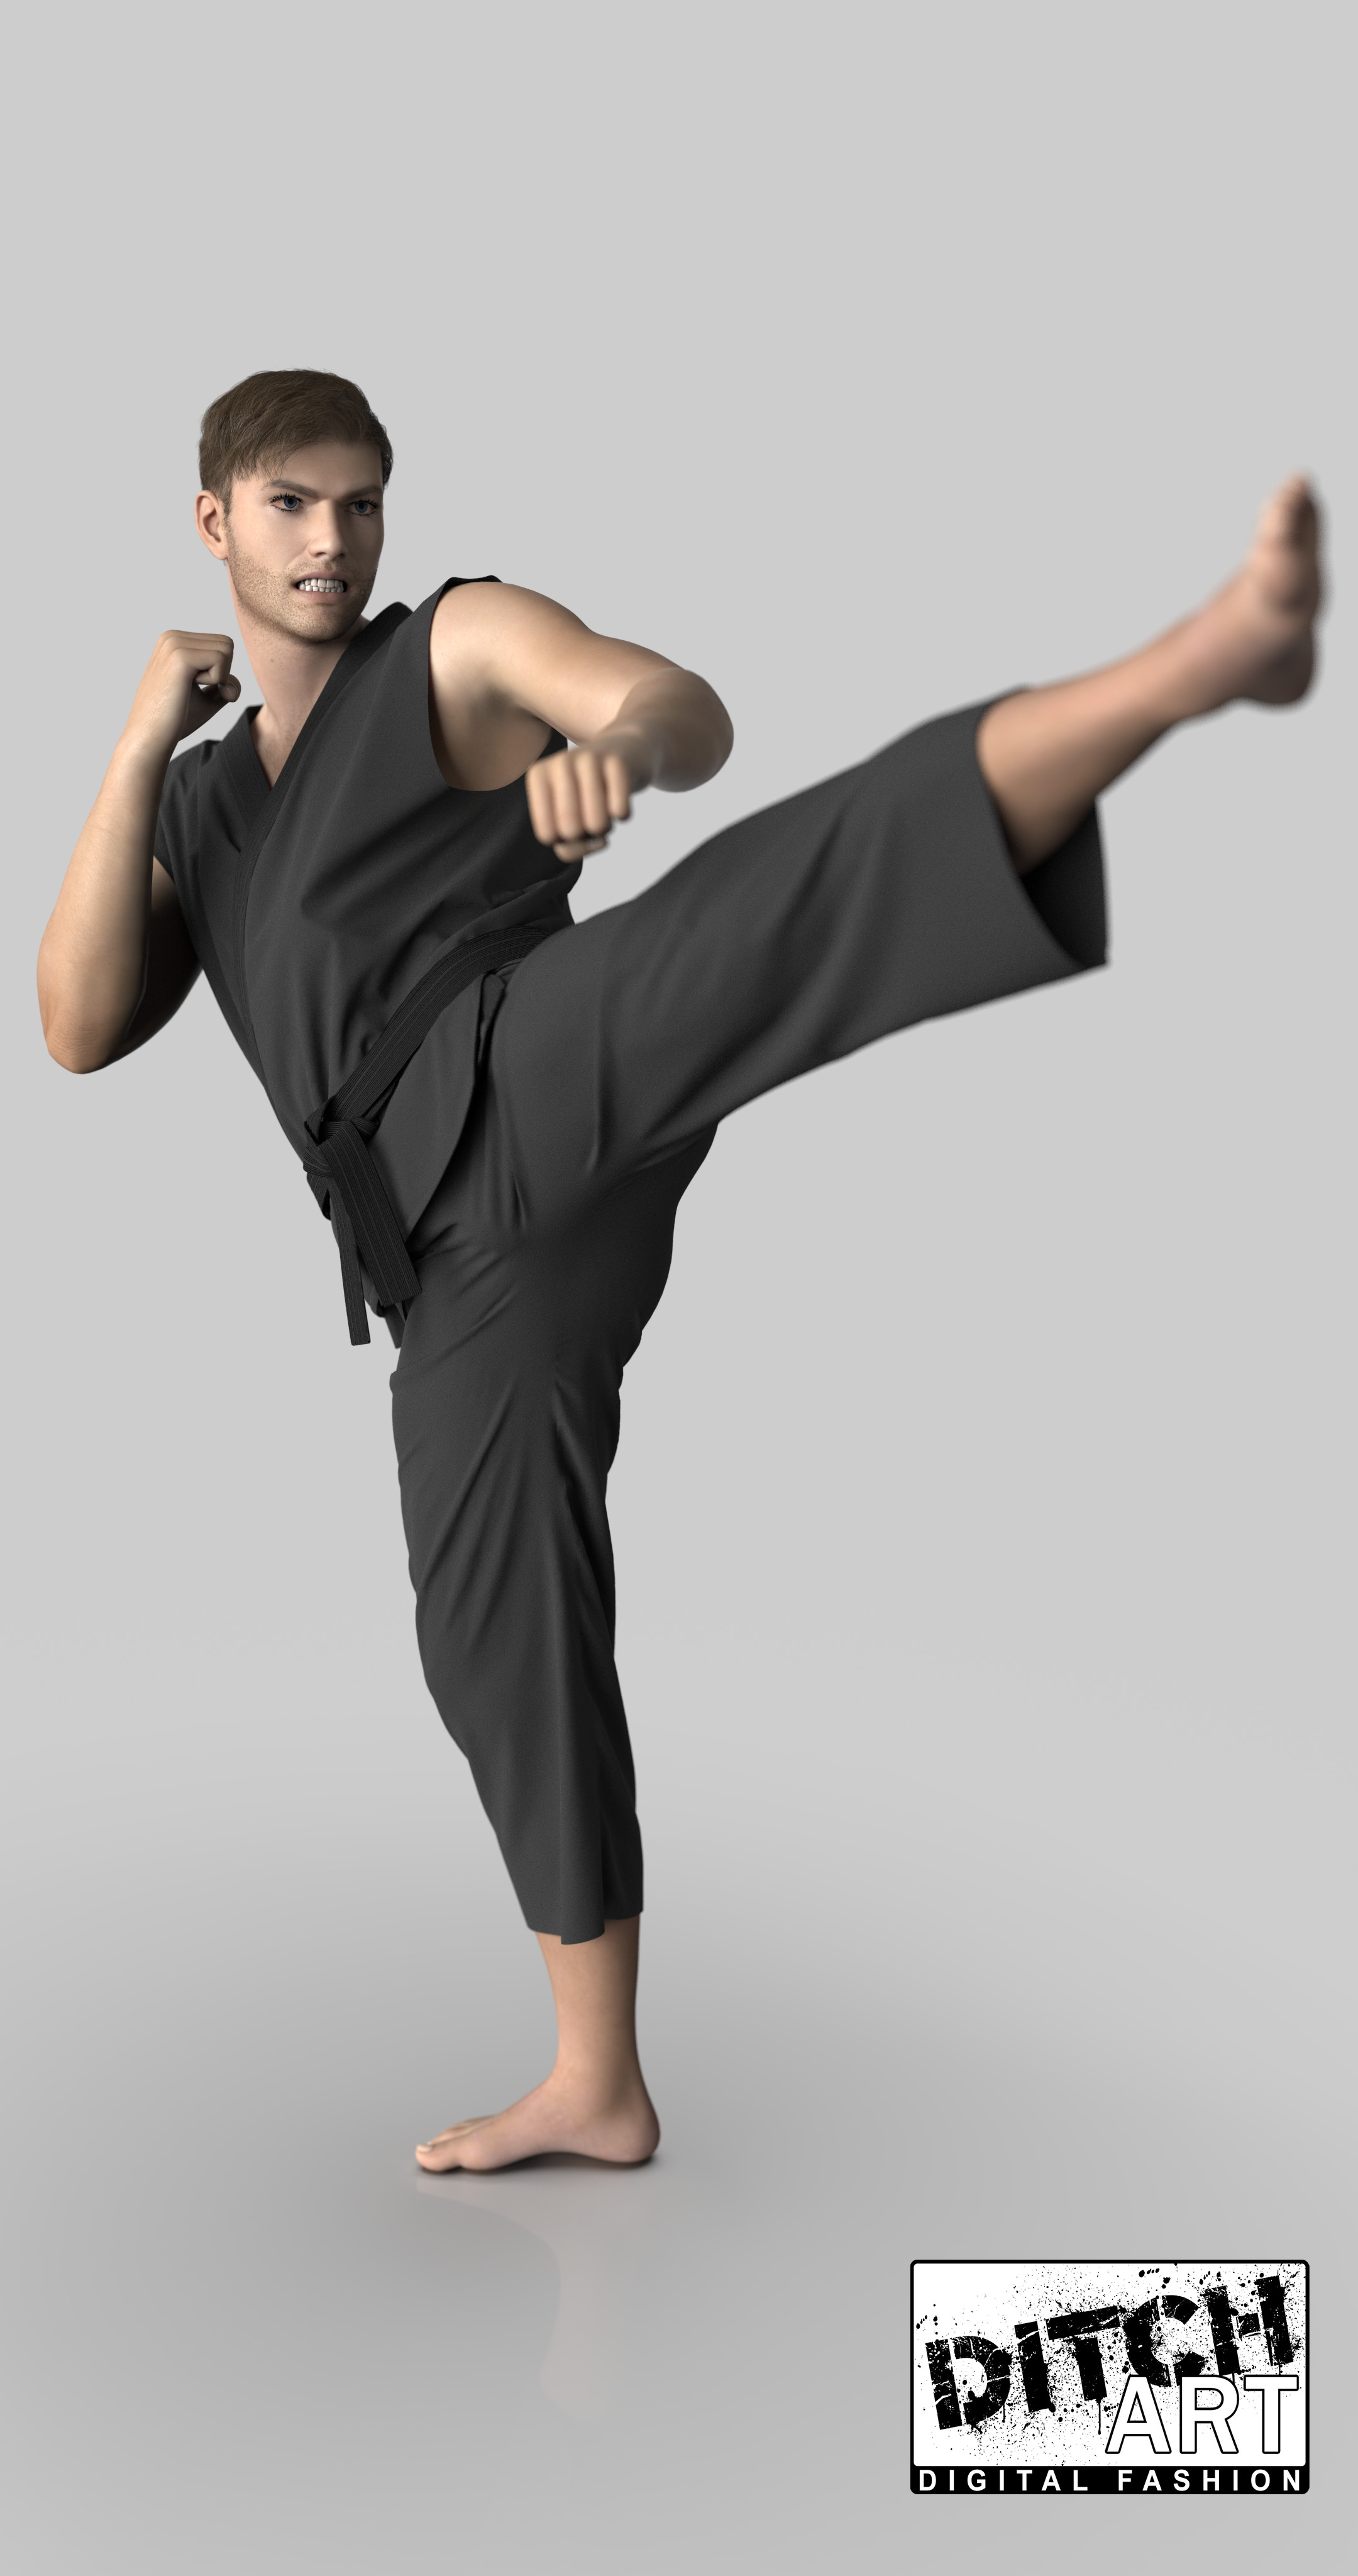 HD wallpaper: pose, kick, martial arts training | Wallpaper Flare